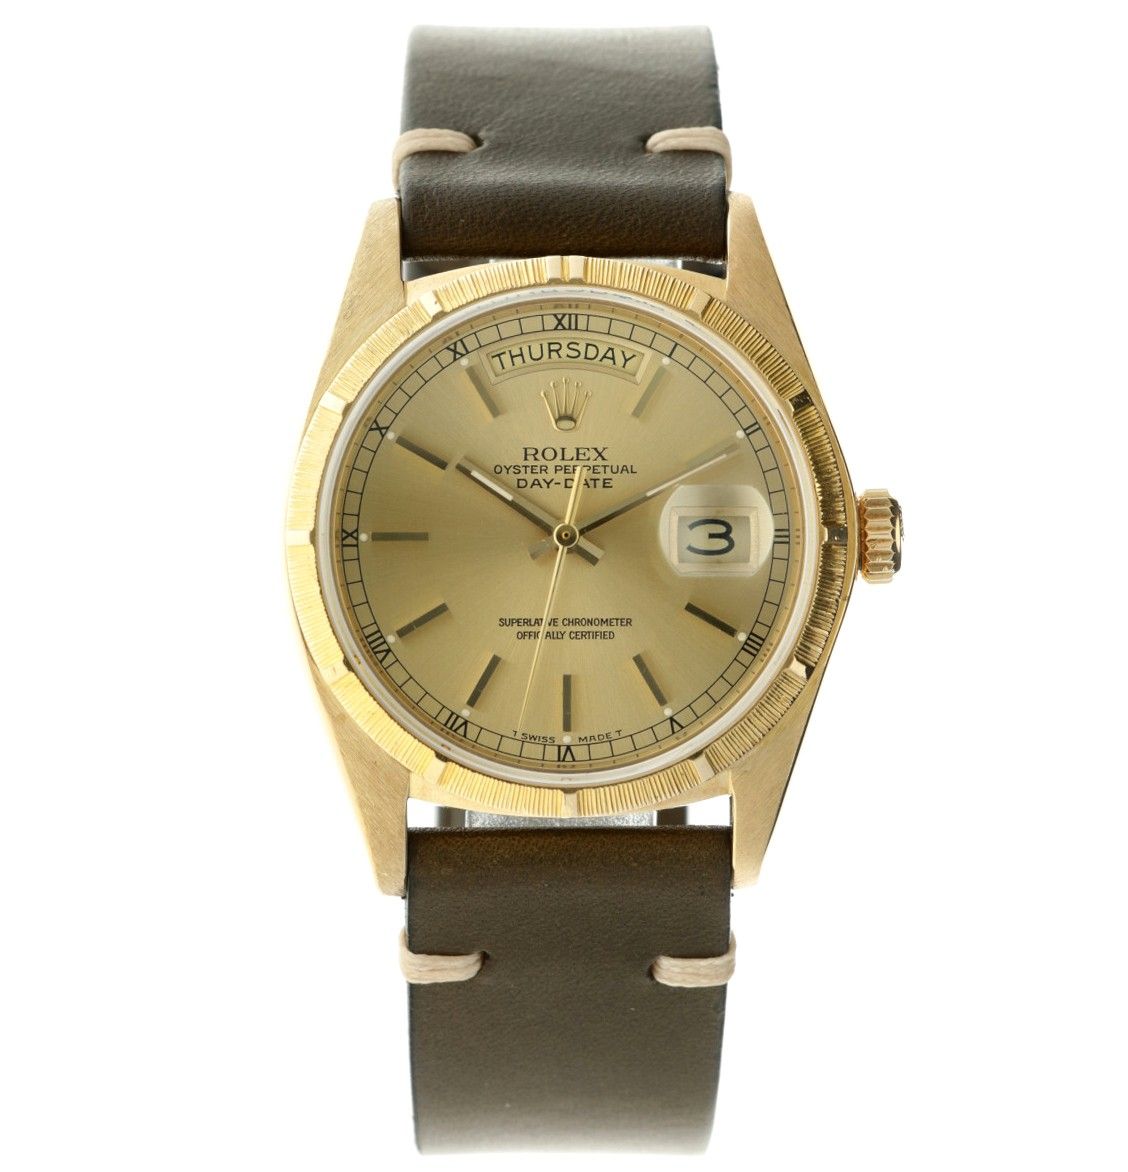 Rolex Day-Date 18038 - Men's watch - apprx. 1978. Case: yellow gold (18 kt.) - s&hellip;